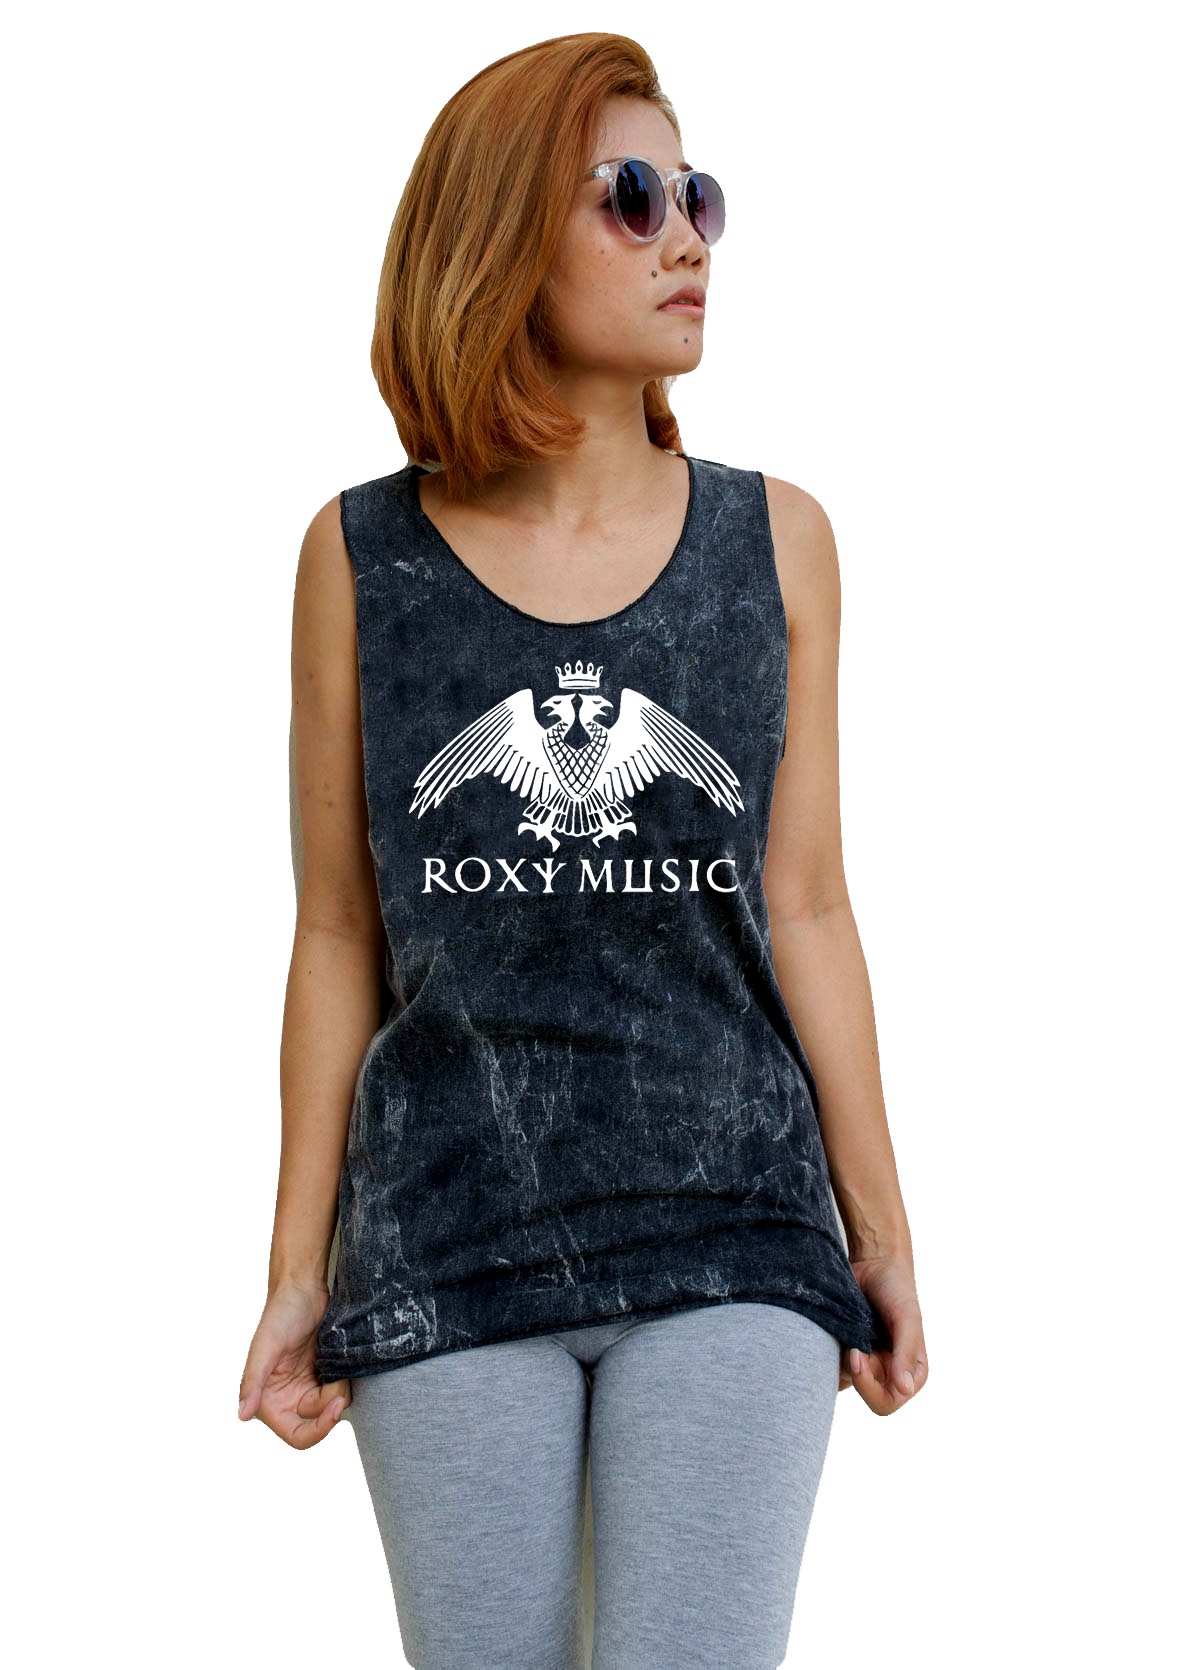 Unisex Roxy Music Tank-Top Singlet vest Sleeveless T-shirt